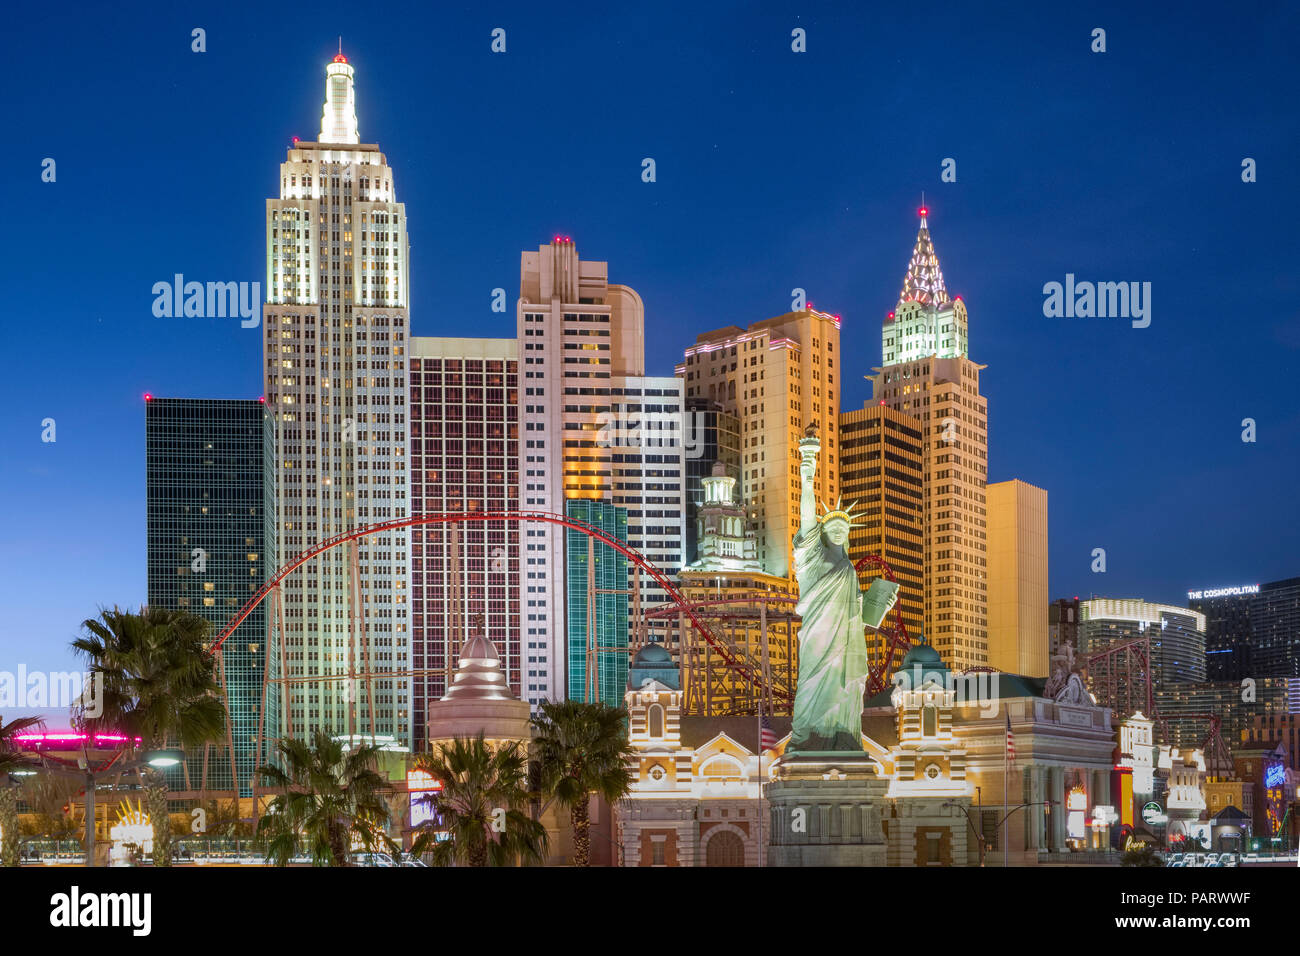 Skyline von Las Vegas Strip Hotels und Casinos, Las Vegas Boulevard, Nevada, USA bei Nacht Stockfoto